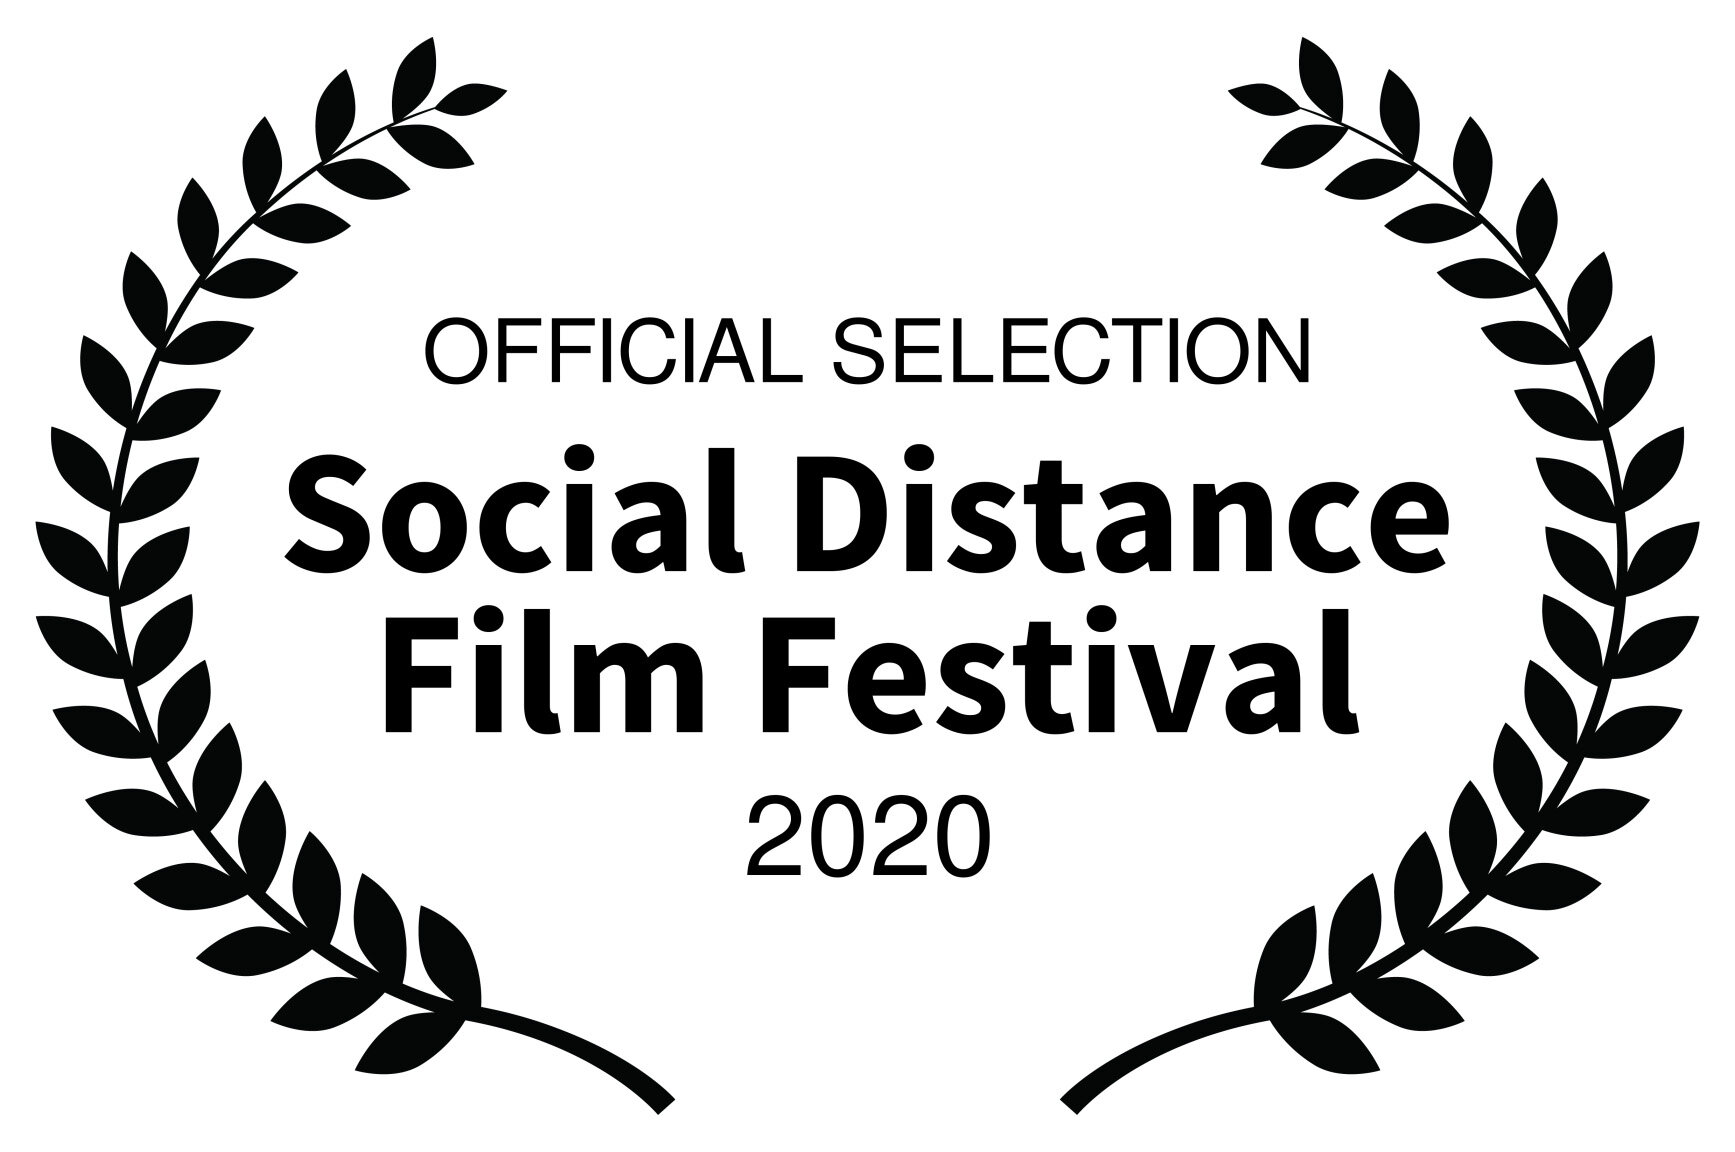 OFFICIAL SELECTION - Social Distance Film Festival - 2020 Black.jpg